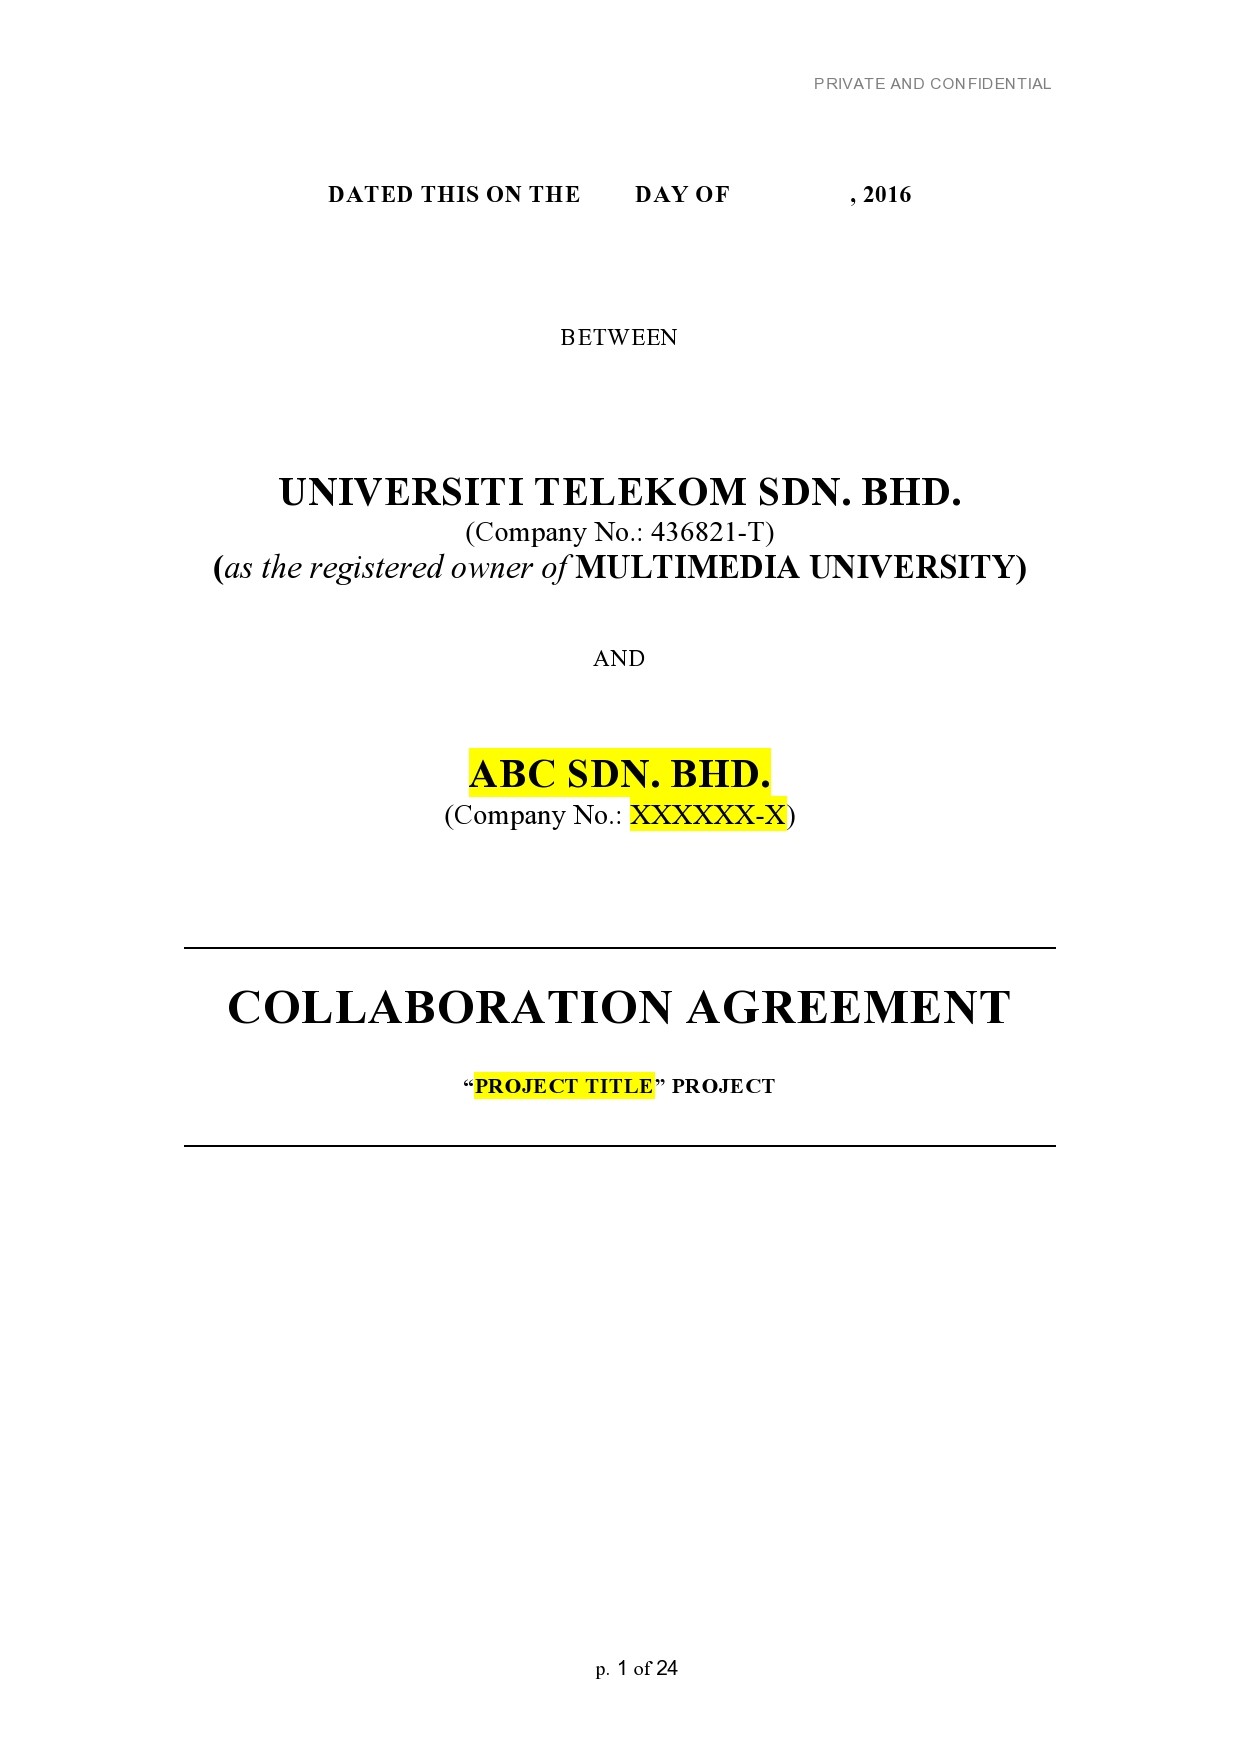 Free collaboration agreement 01